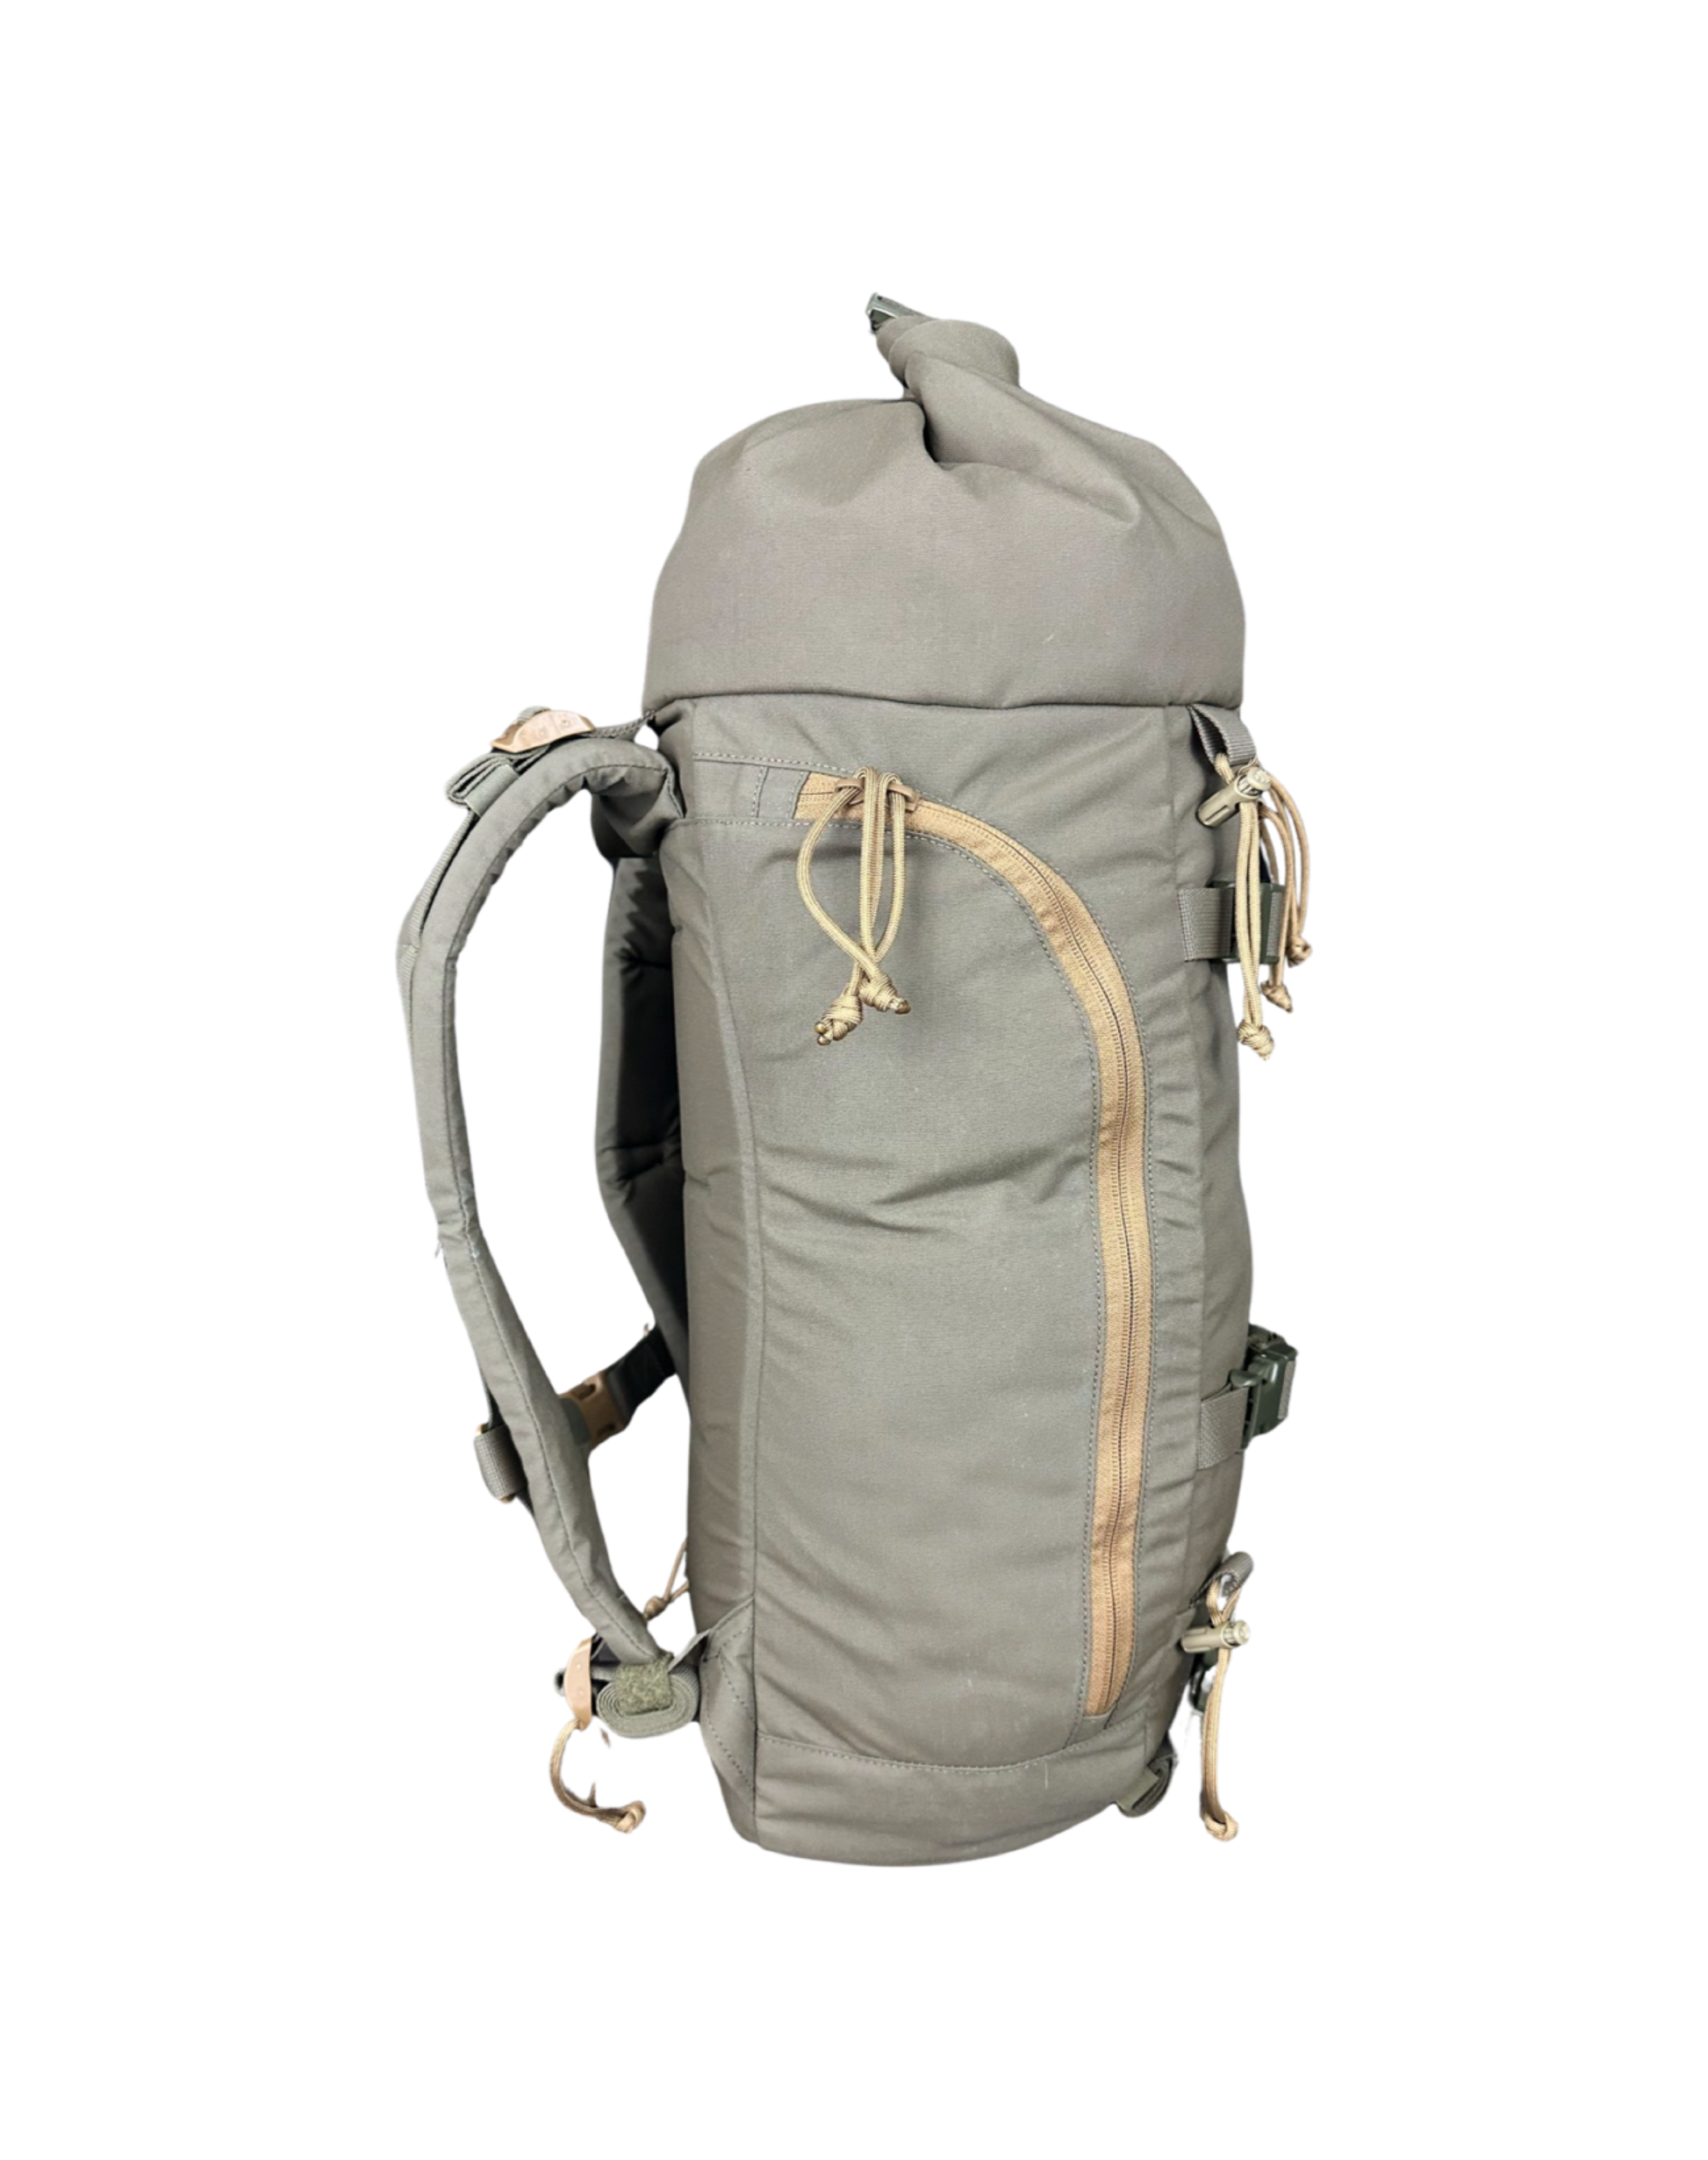 Ruckmule mountain gear rainier backpack day pack roll top